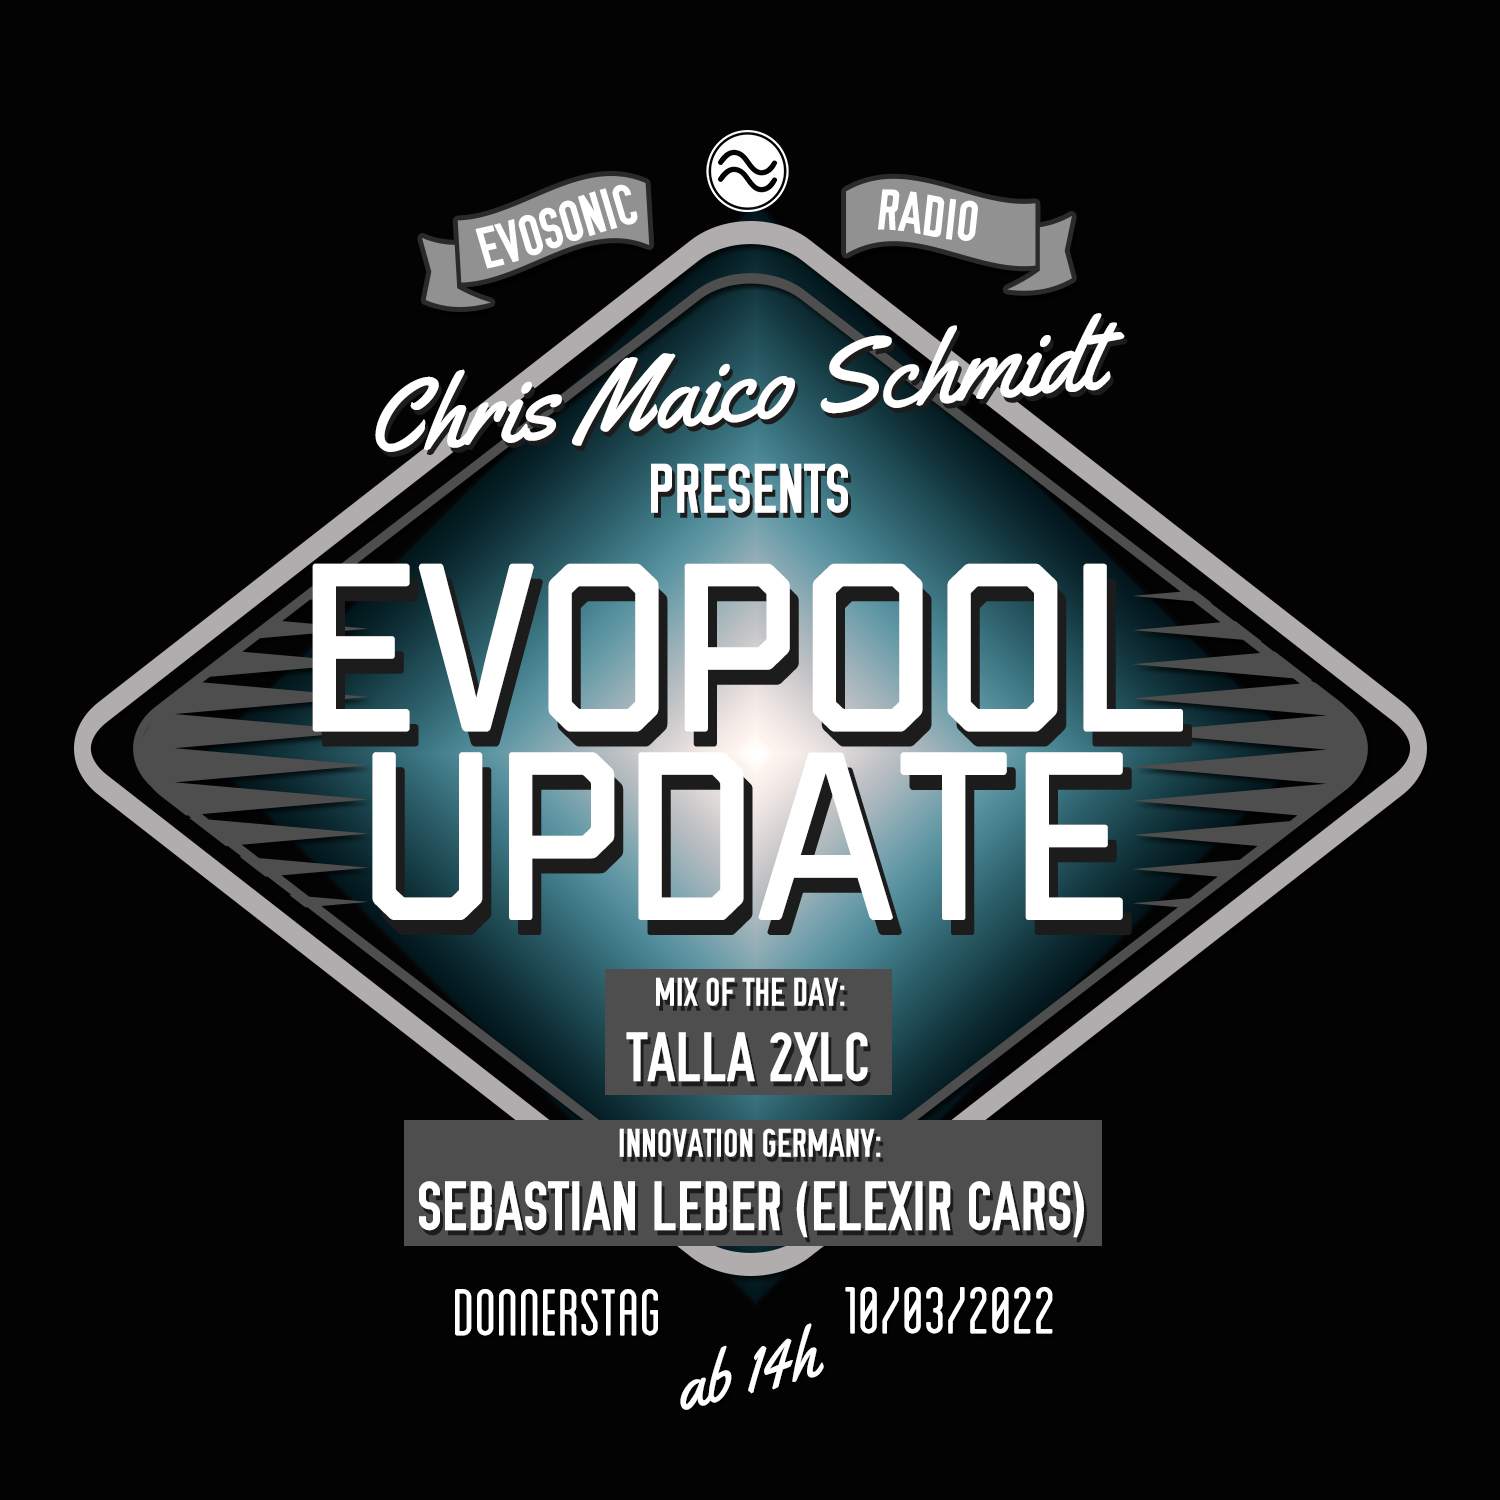 Evopool Update - Página frontal